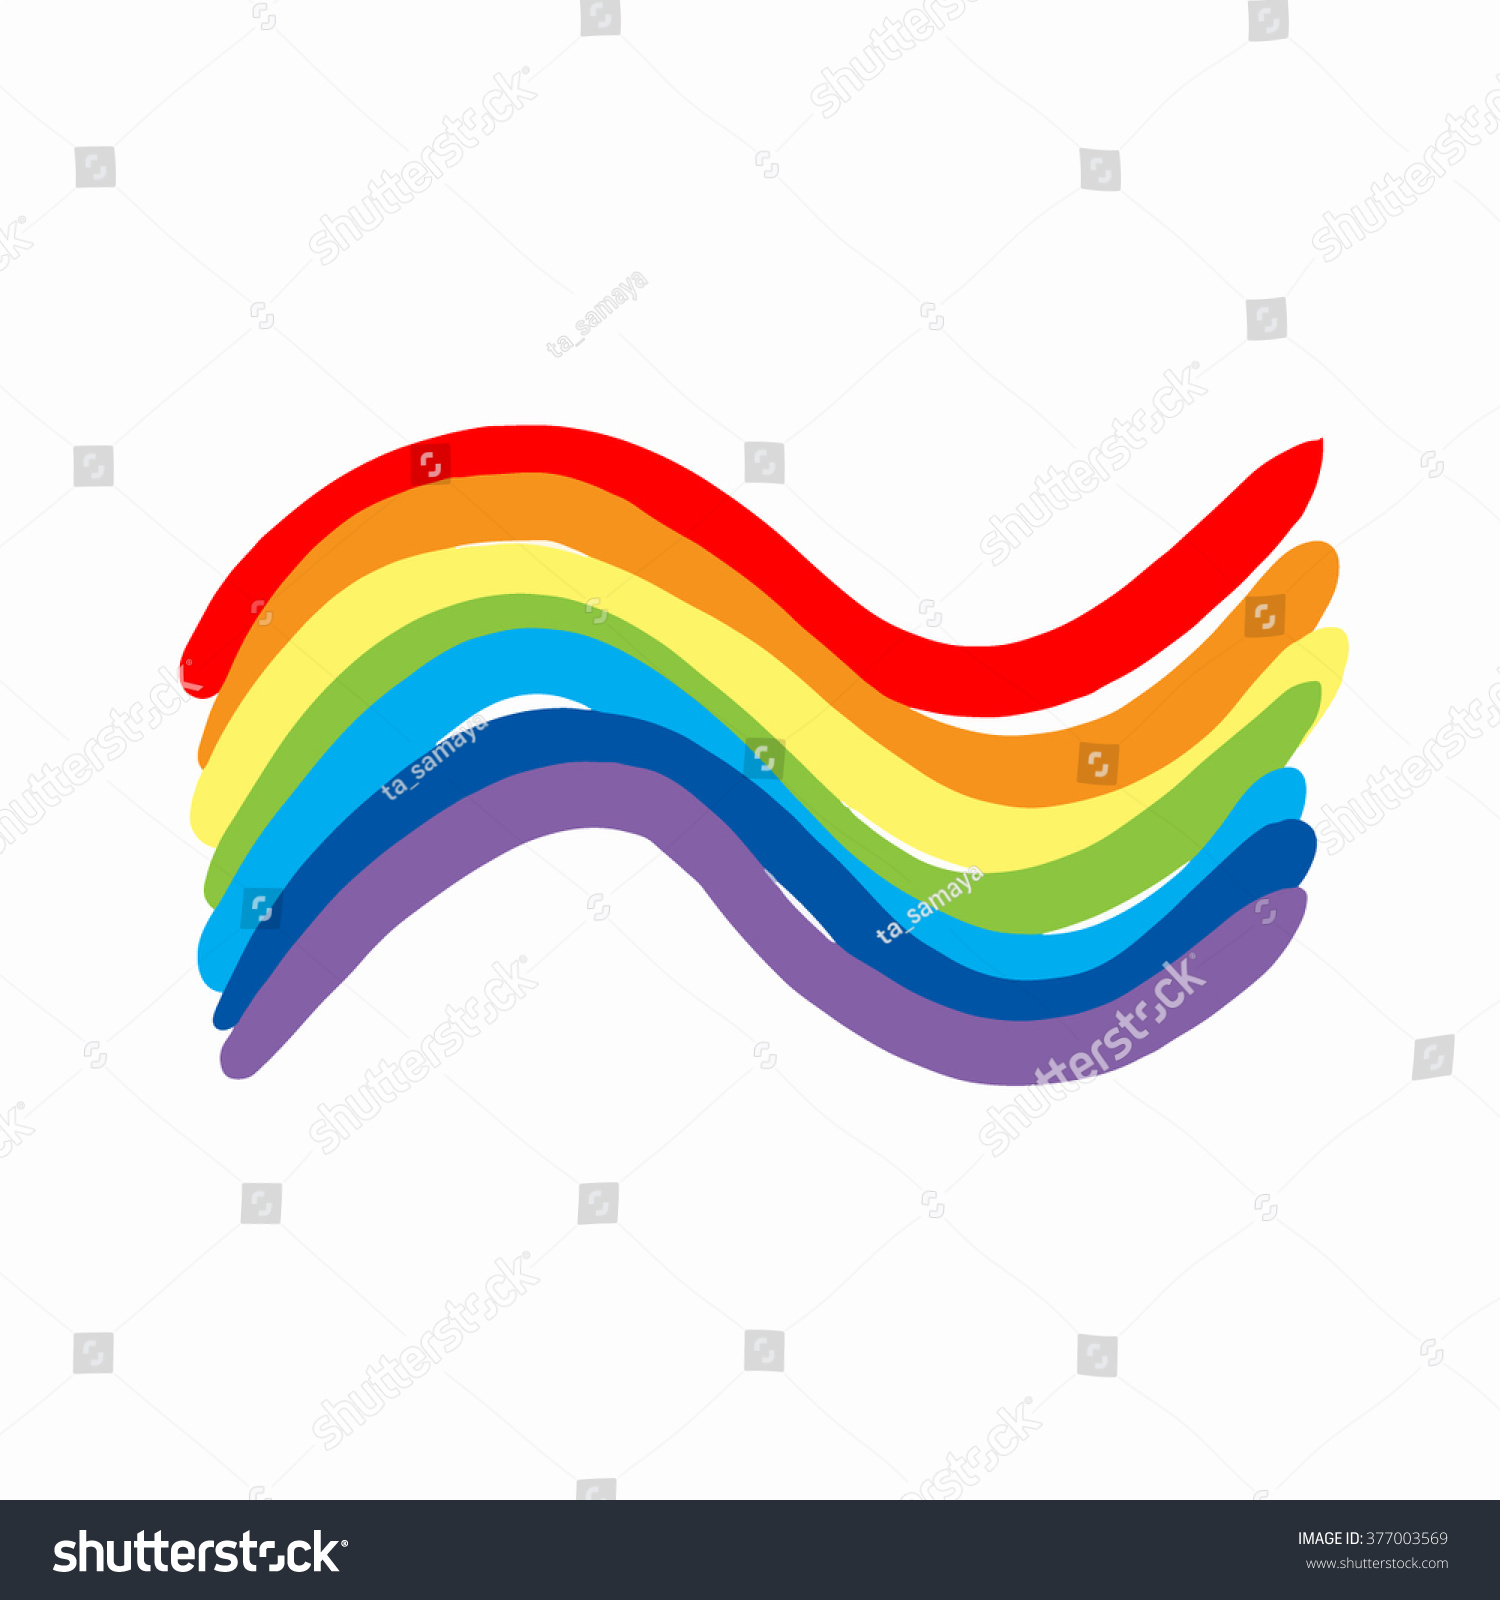 Download Rainbow Hand Drawn Vector Illustration Stock Vector ...